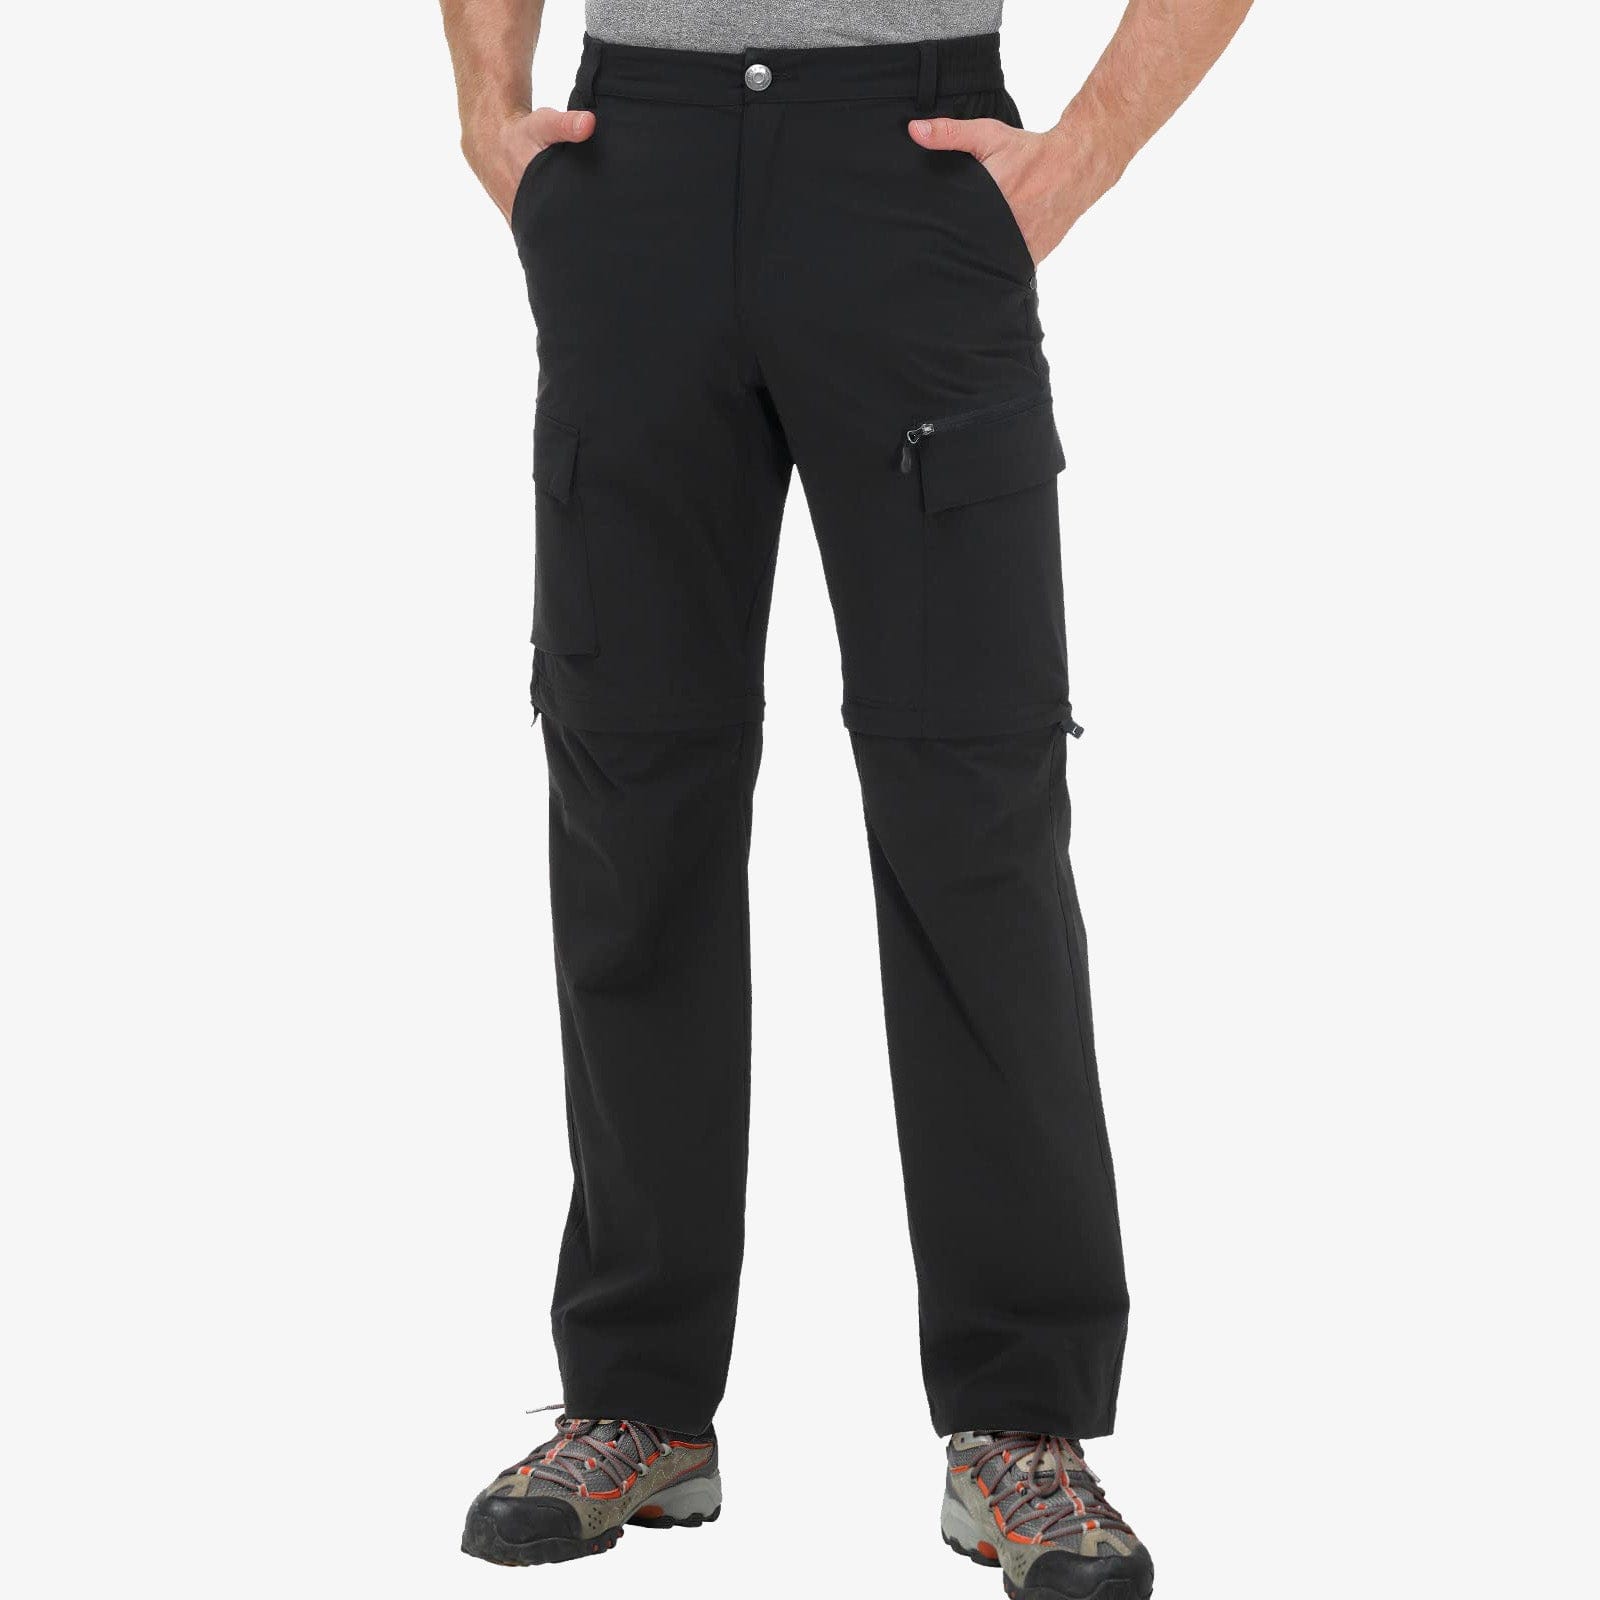 Mier Men's Convertible Hiking Pants Zip Off Quick Dry Cargo Pants, Black / 36